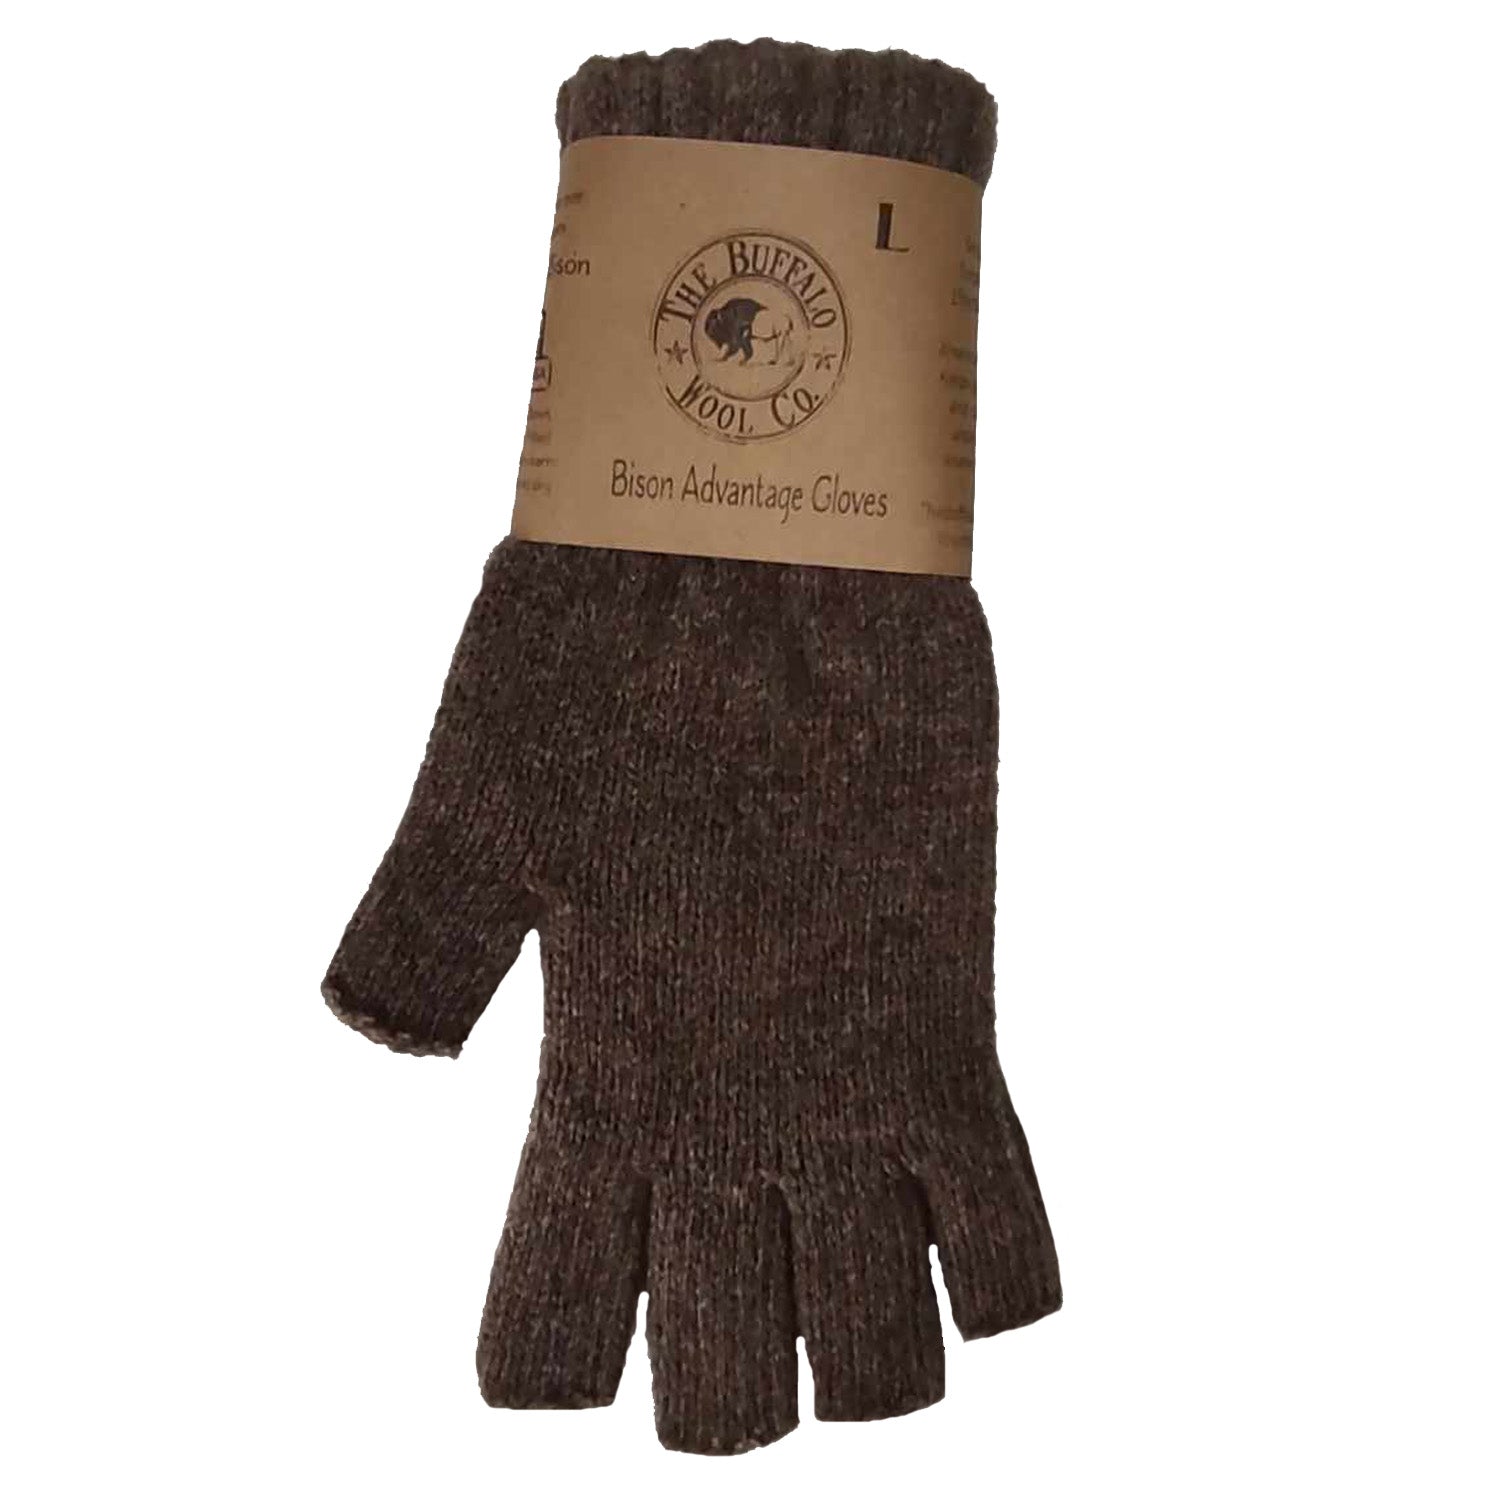 Leather Gloves, Fingerless, Brown, M, PR